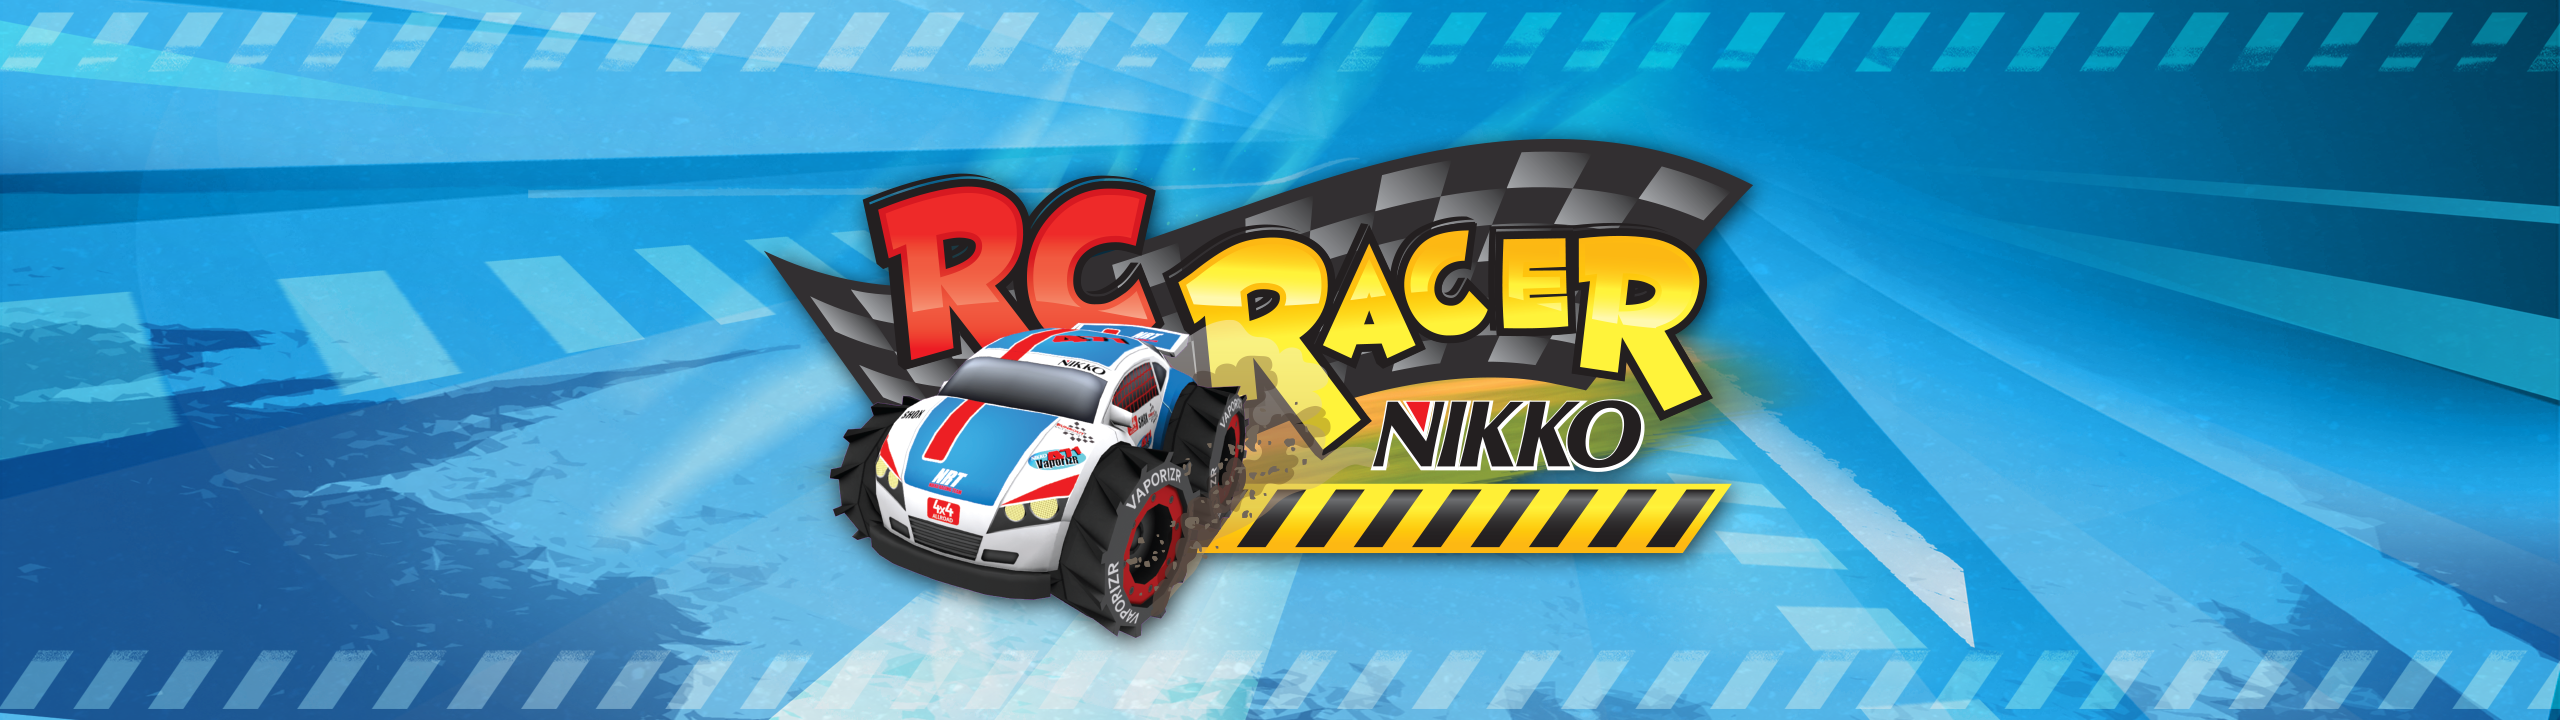 Nikko RC1